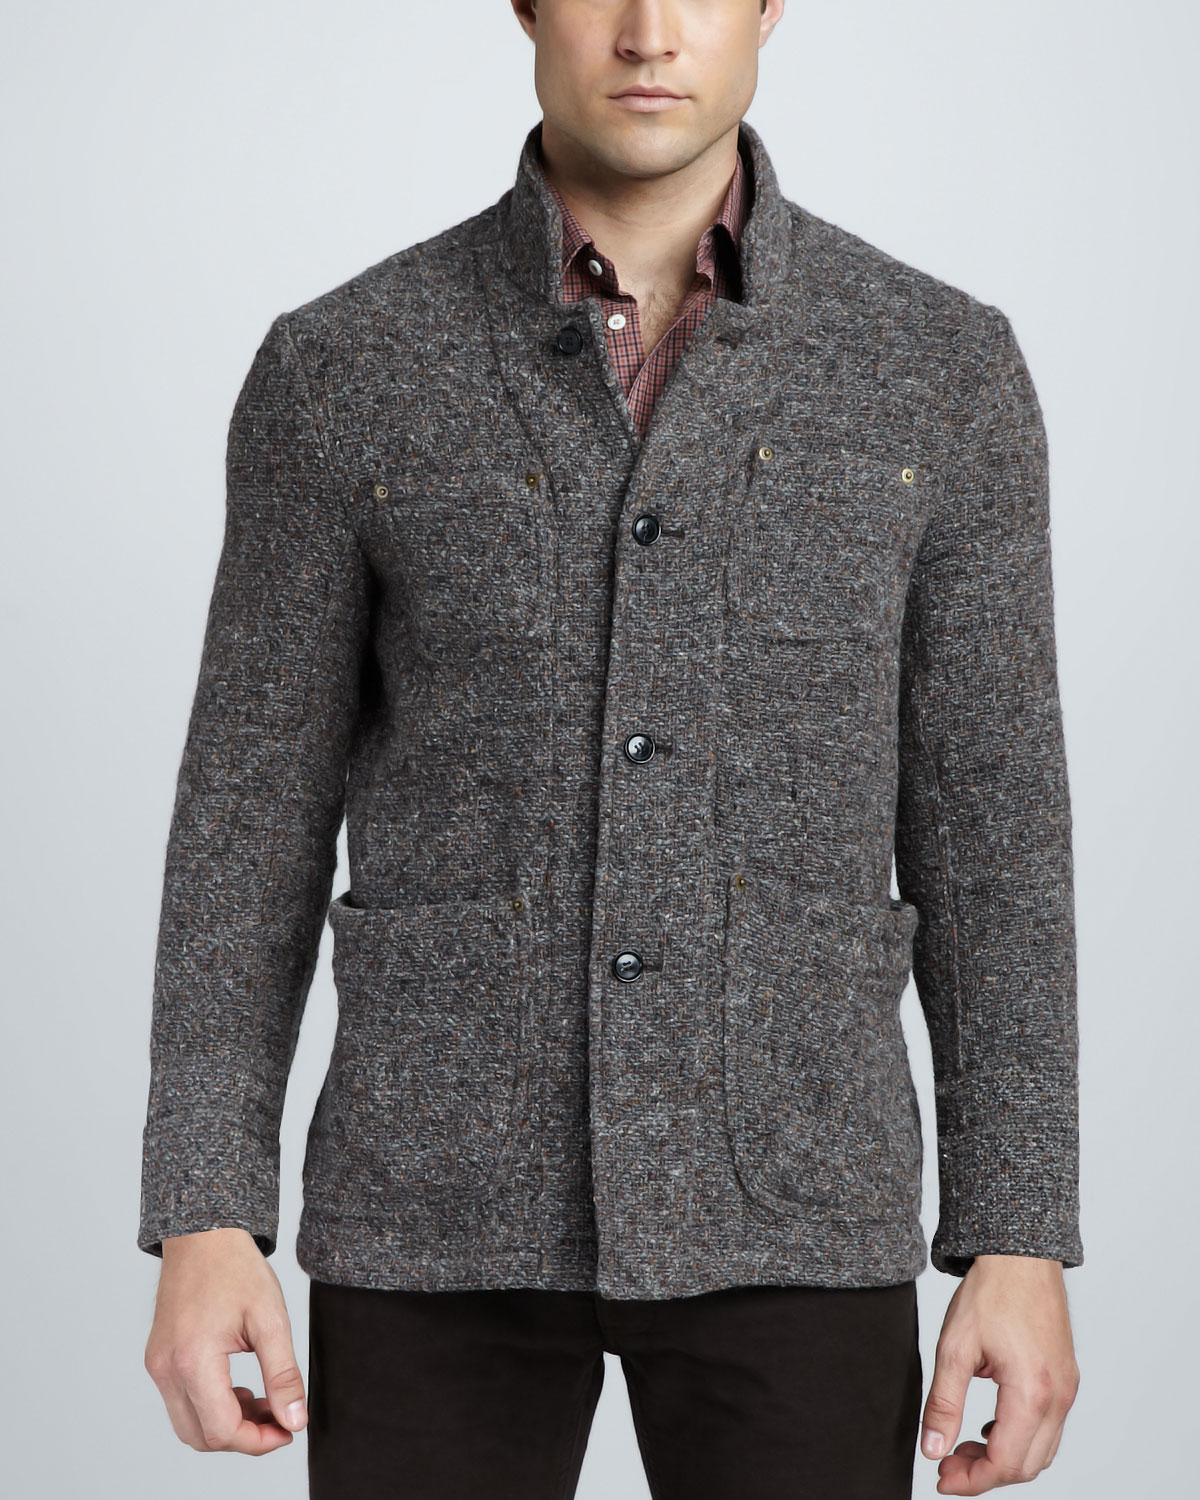 Lyst - Billy Reid Slouchy Tweed Jacket in Gray for Men